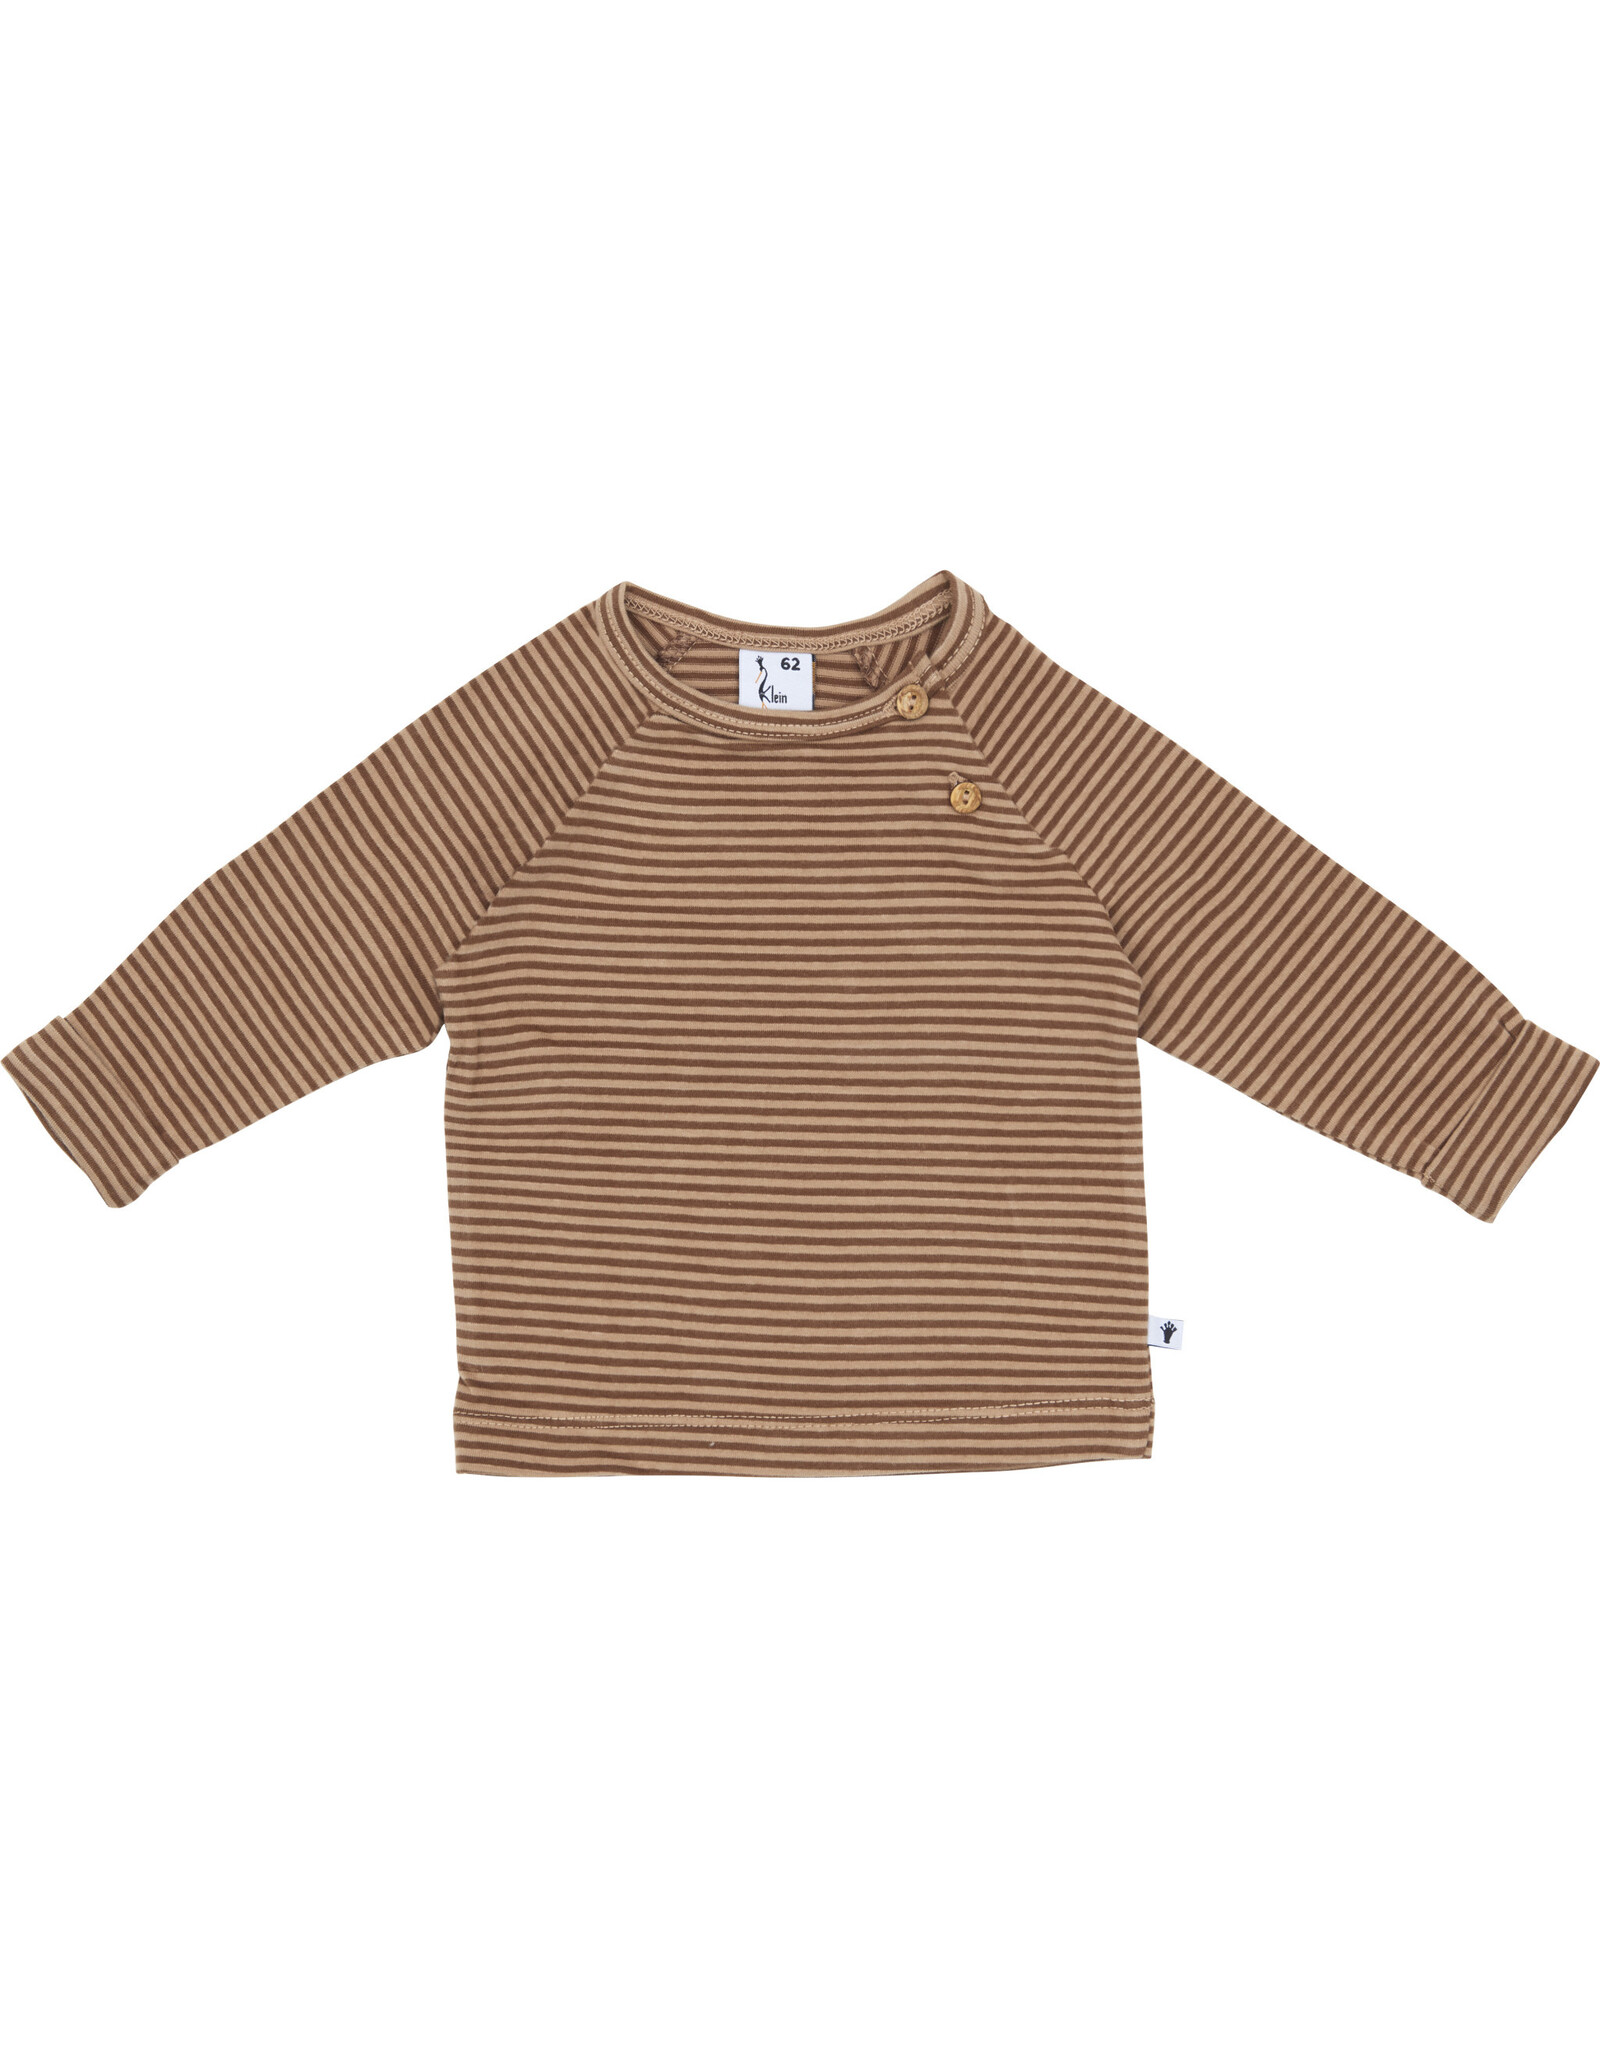 Klein Shirt Buttons Stripe Burro/Rawhide